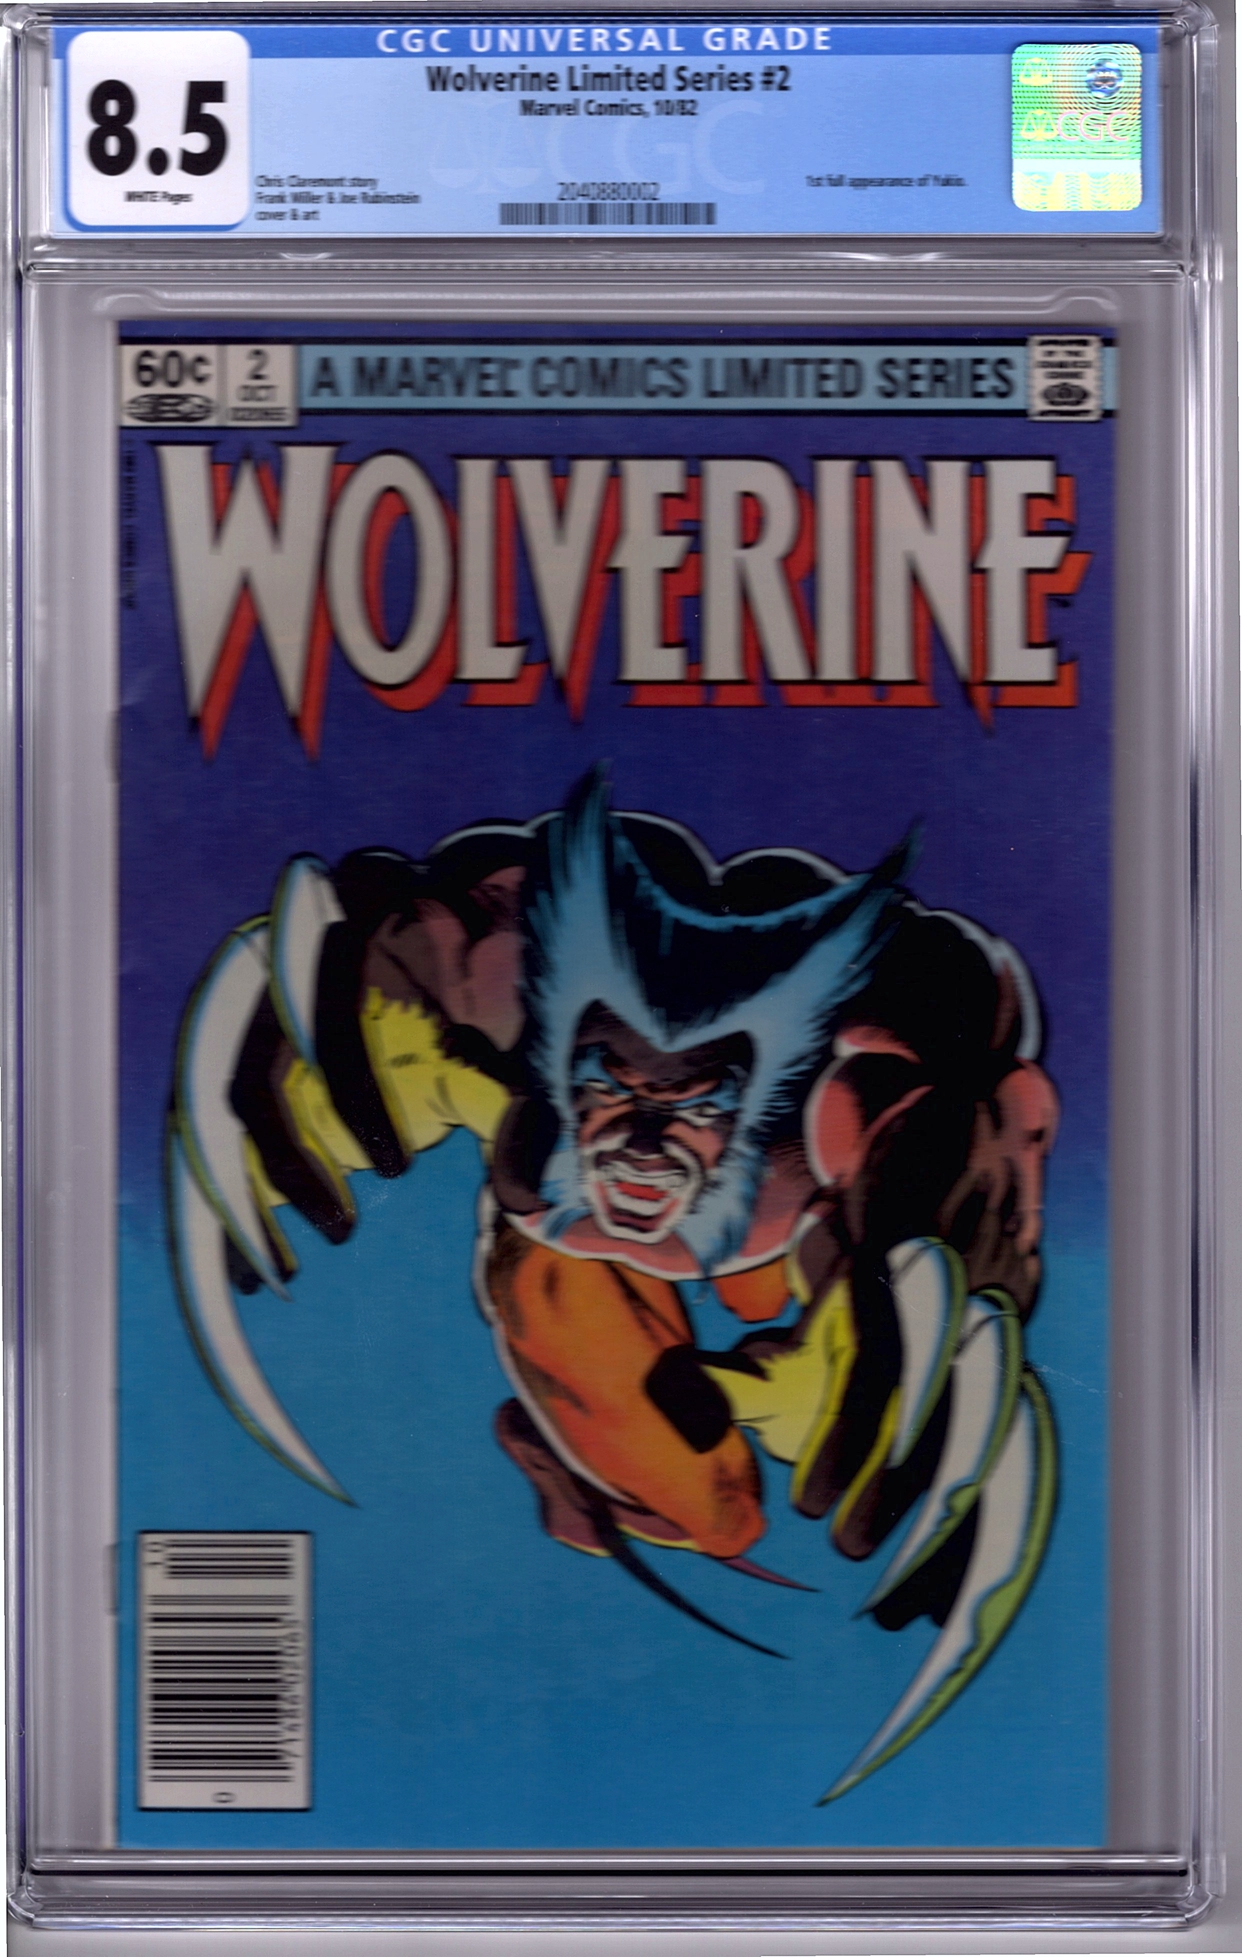 Wolverine Limited V1#2 CGC 8.5 